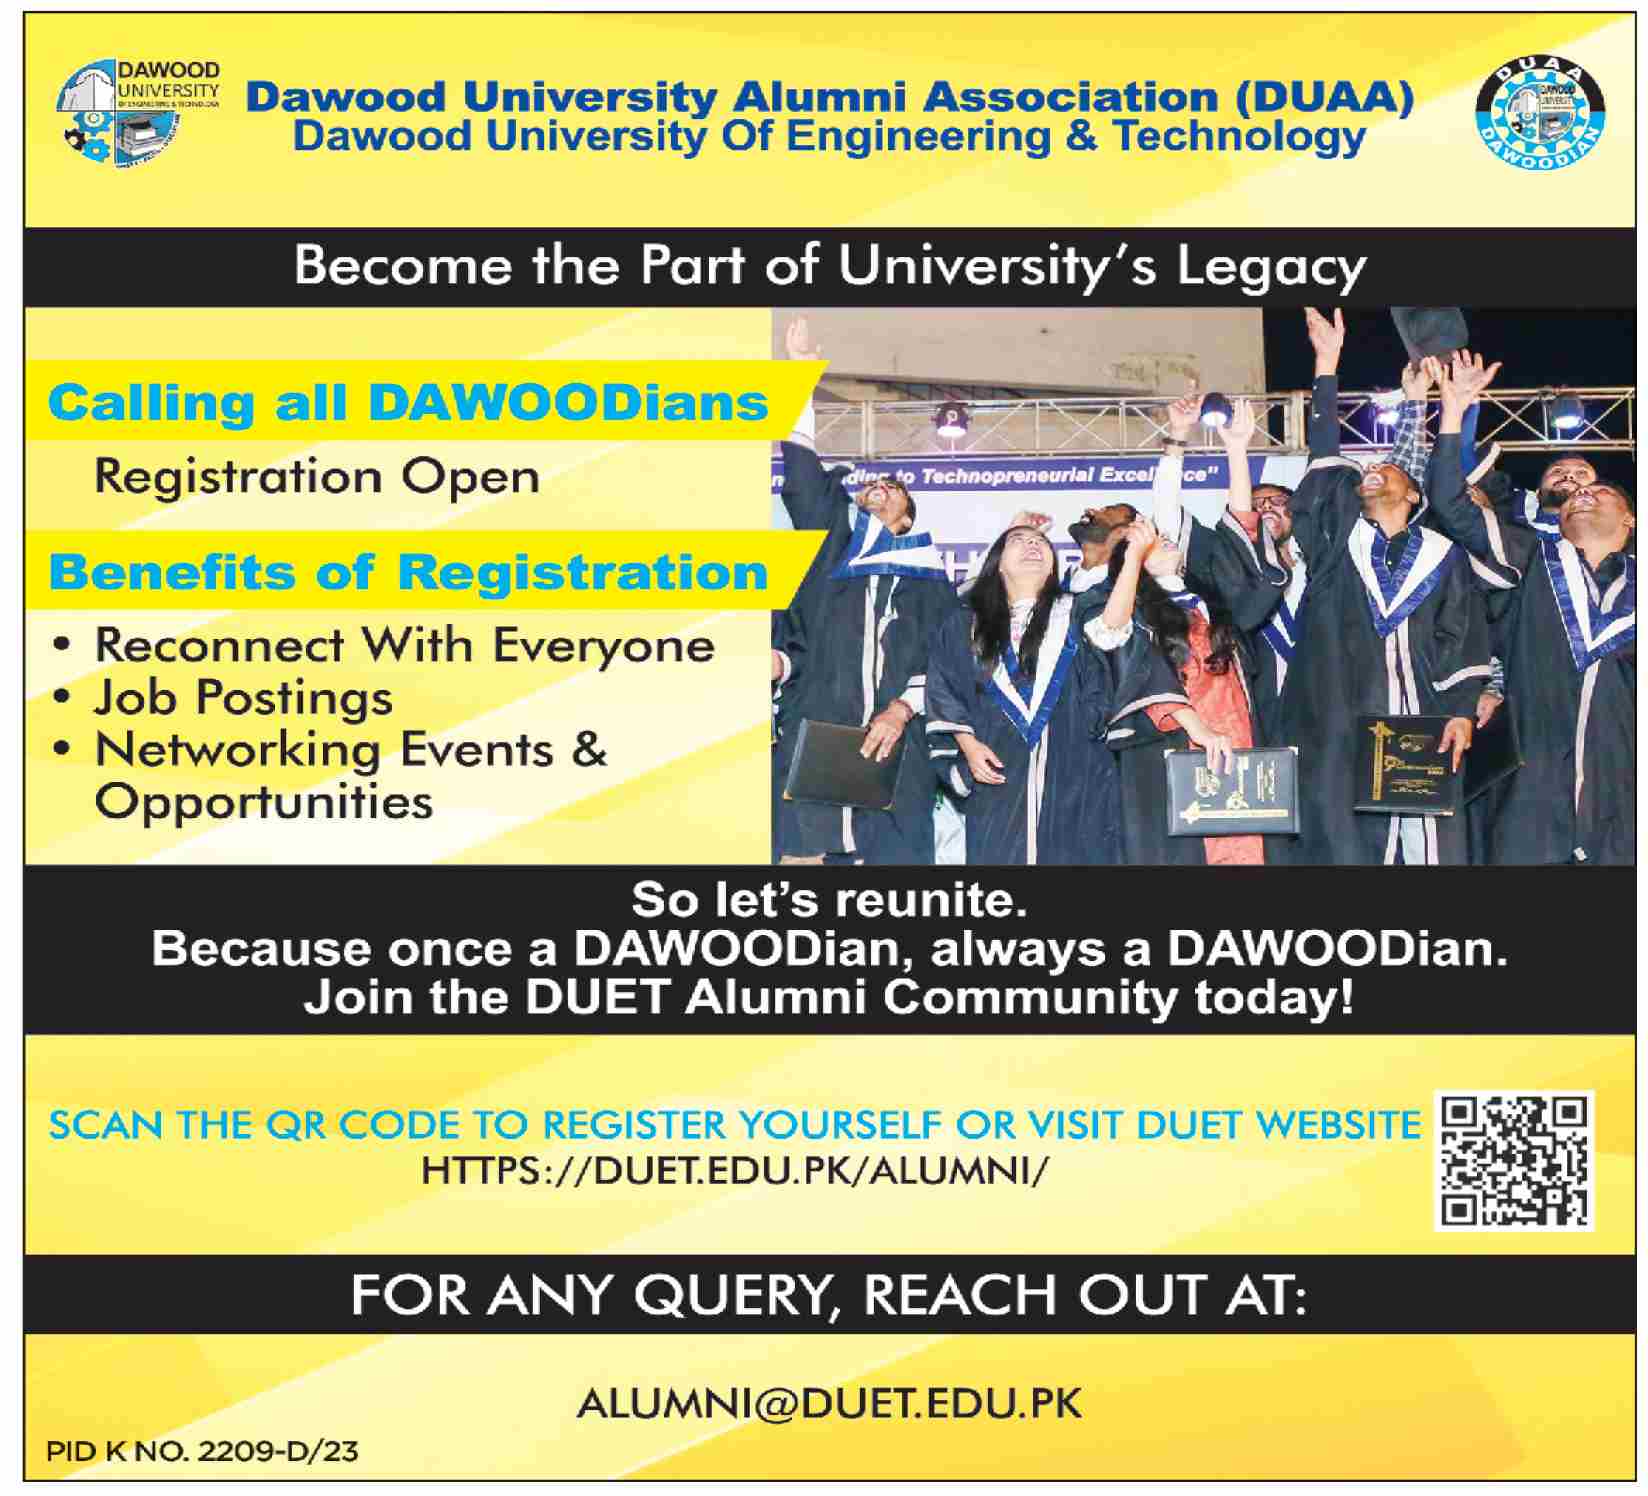 Dawood University of Engineering & Technology DUAA Alumni Association